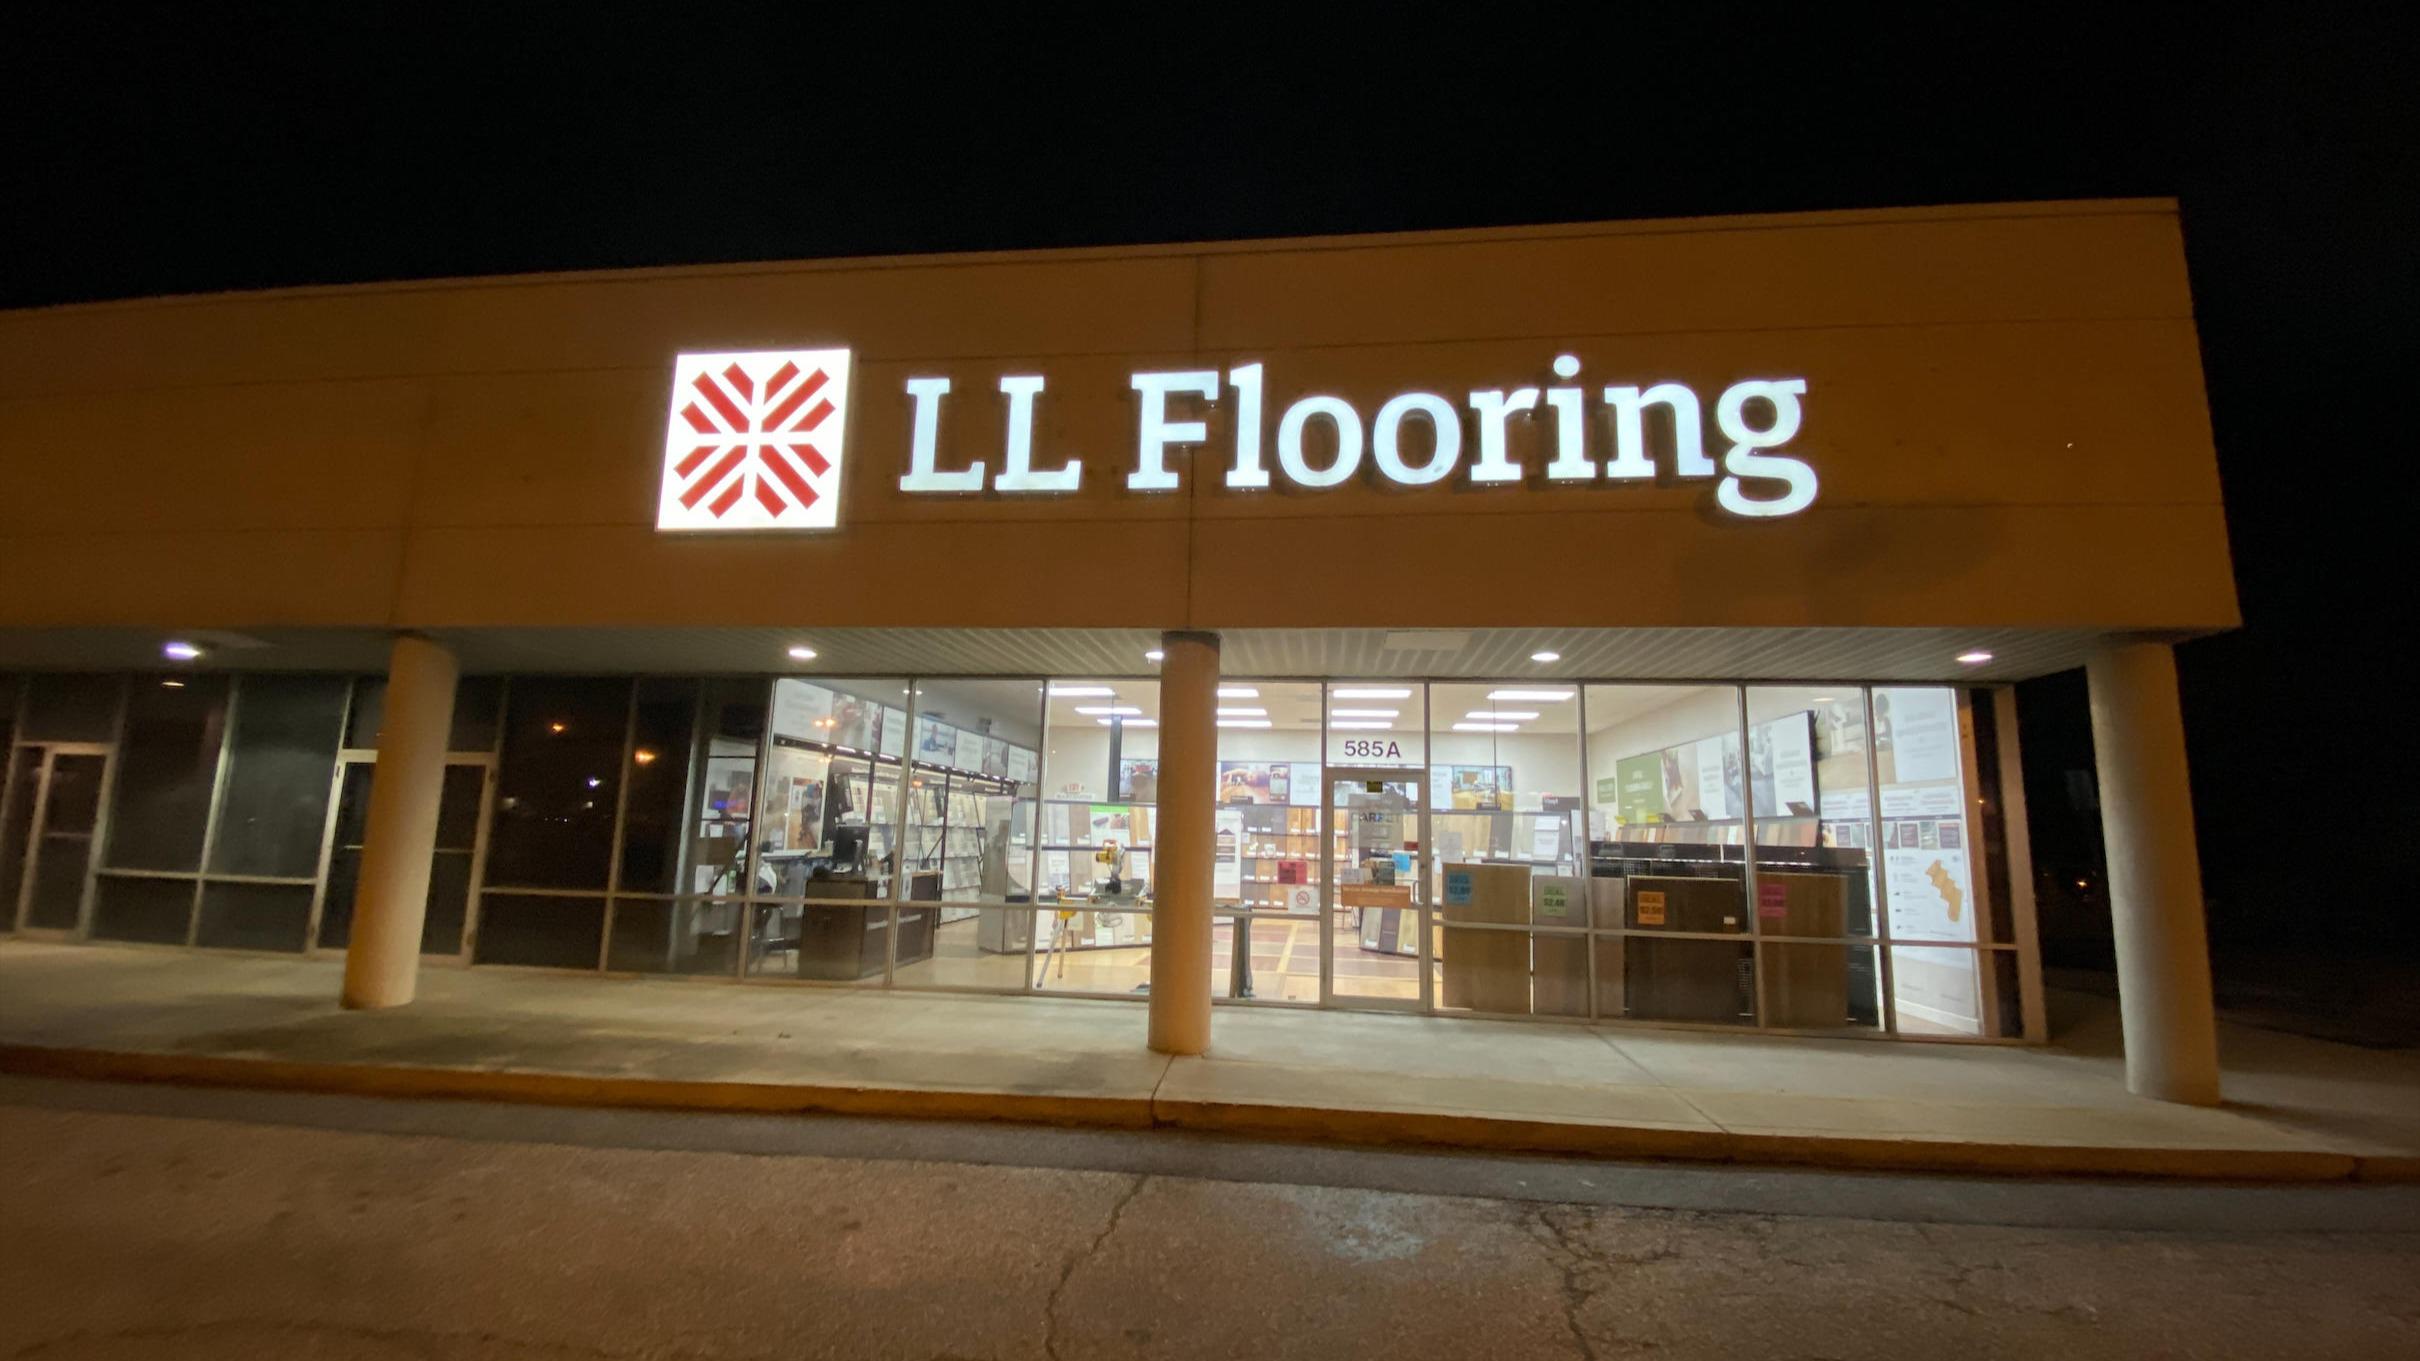 Ll Flooring 1334 Glen Burnie 585 A